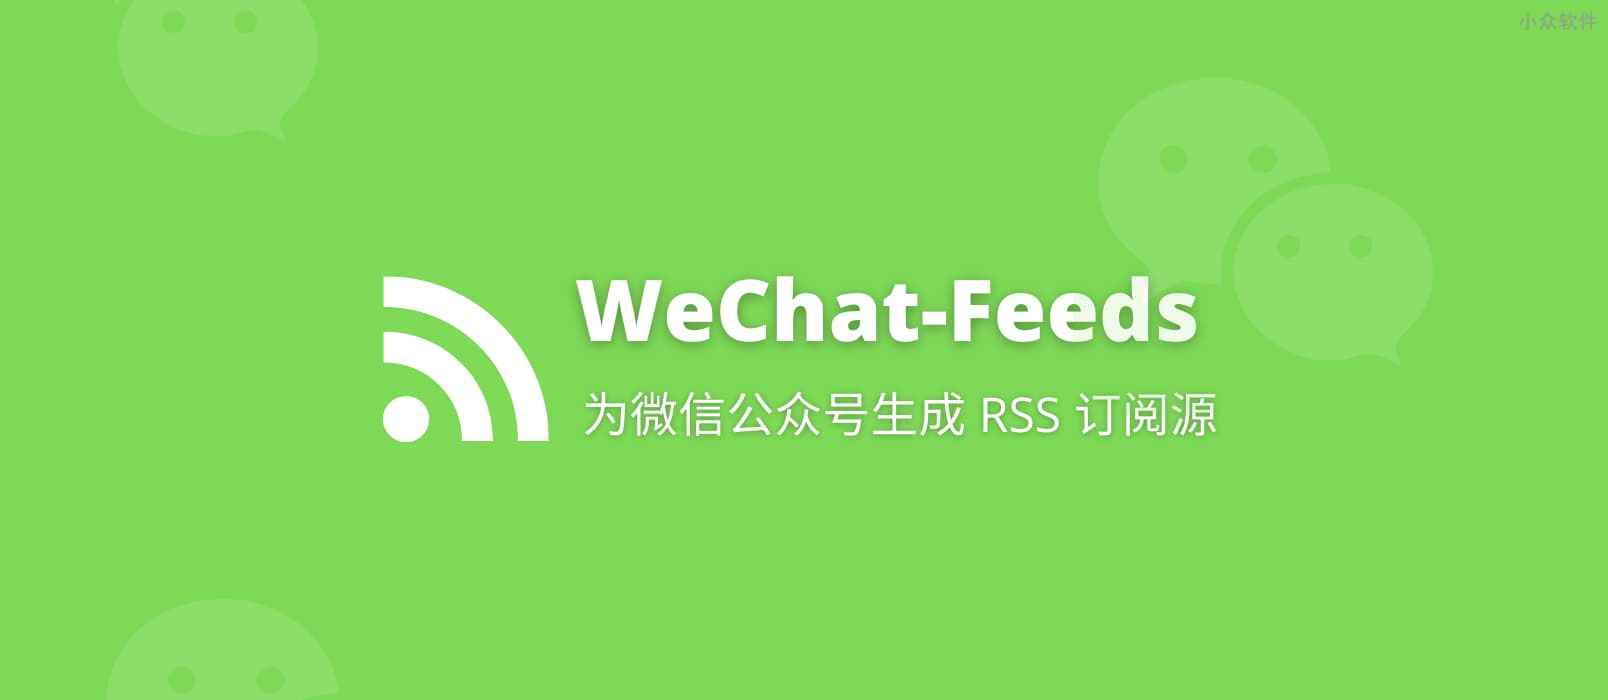 WeChat-Feeds - 给微信公众号生成 RSS 订阅源 